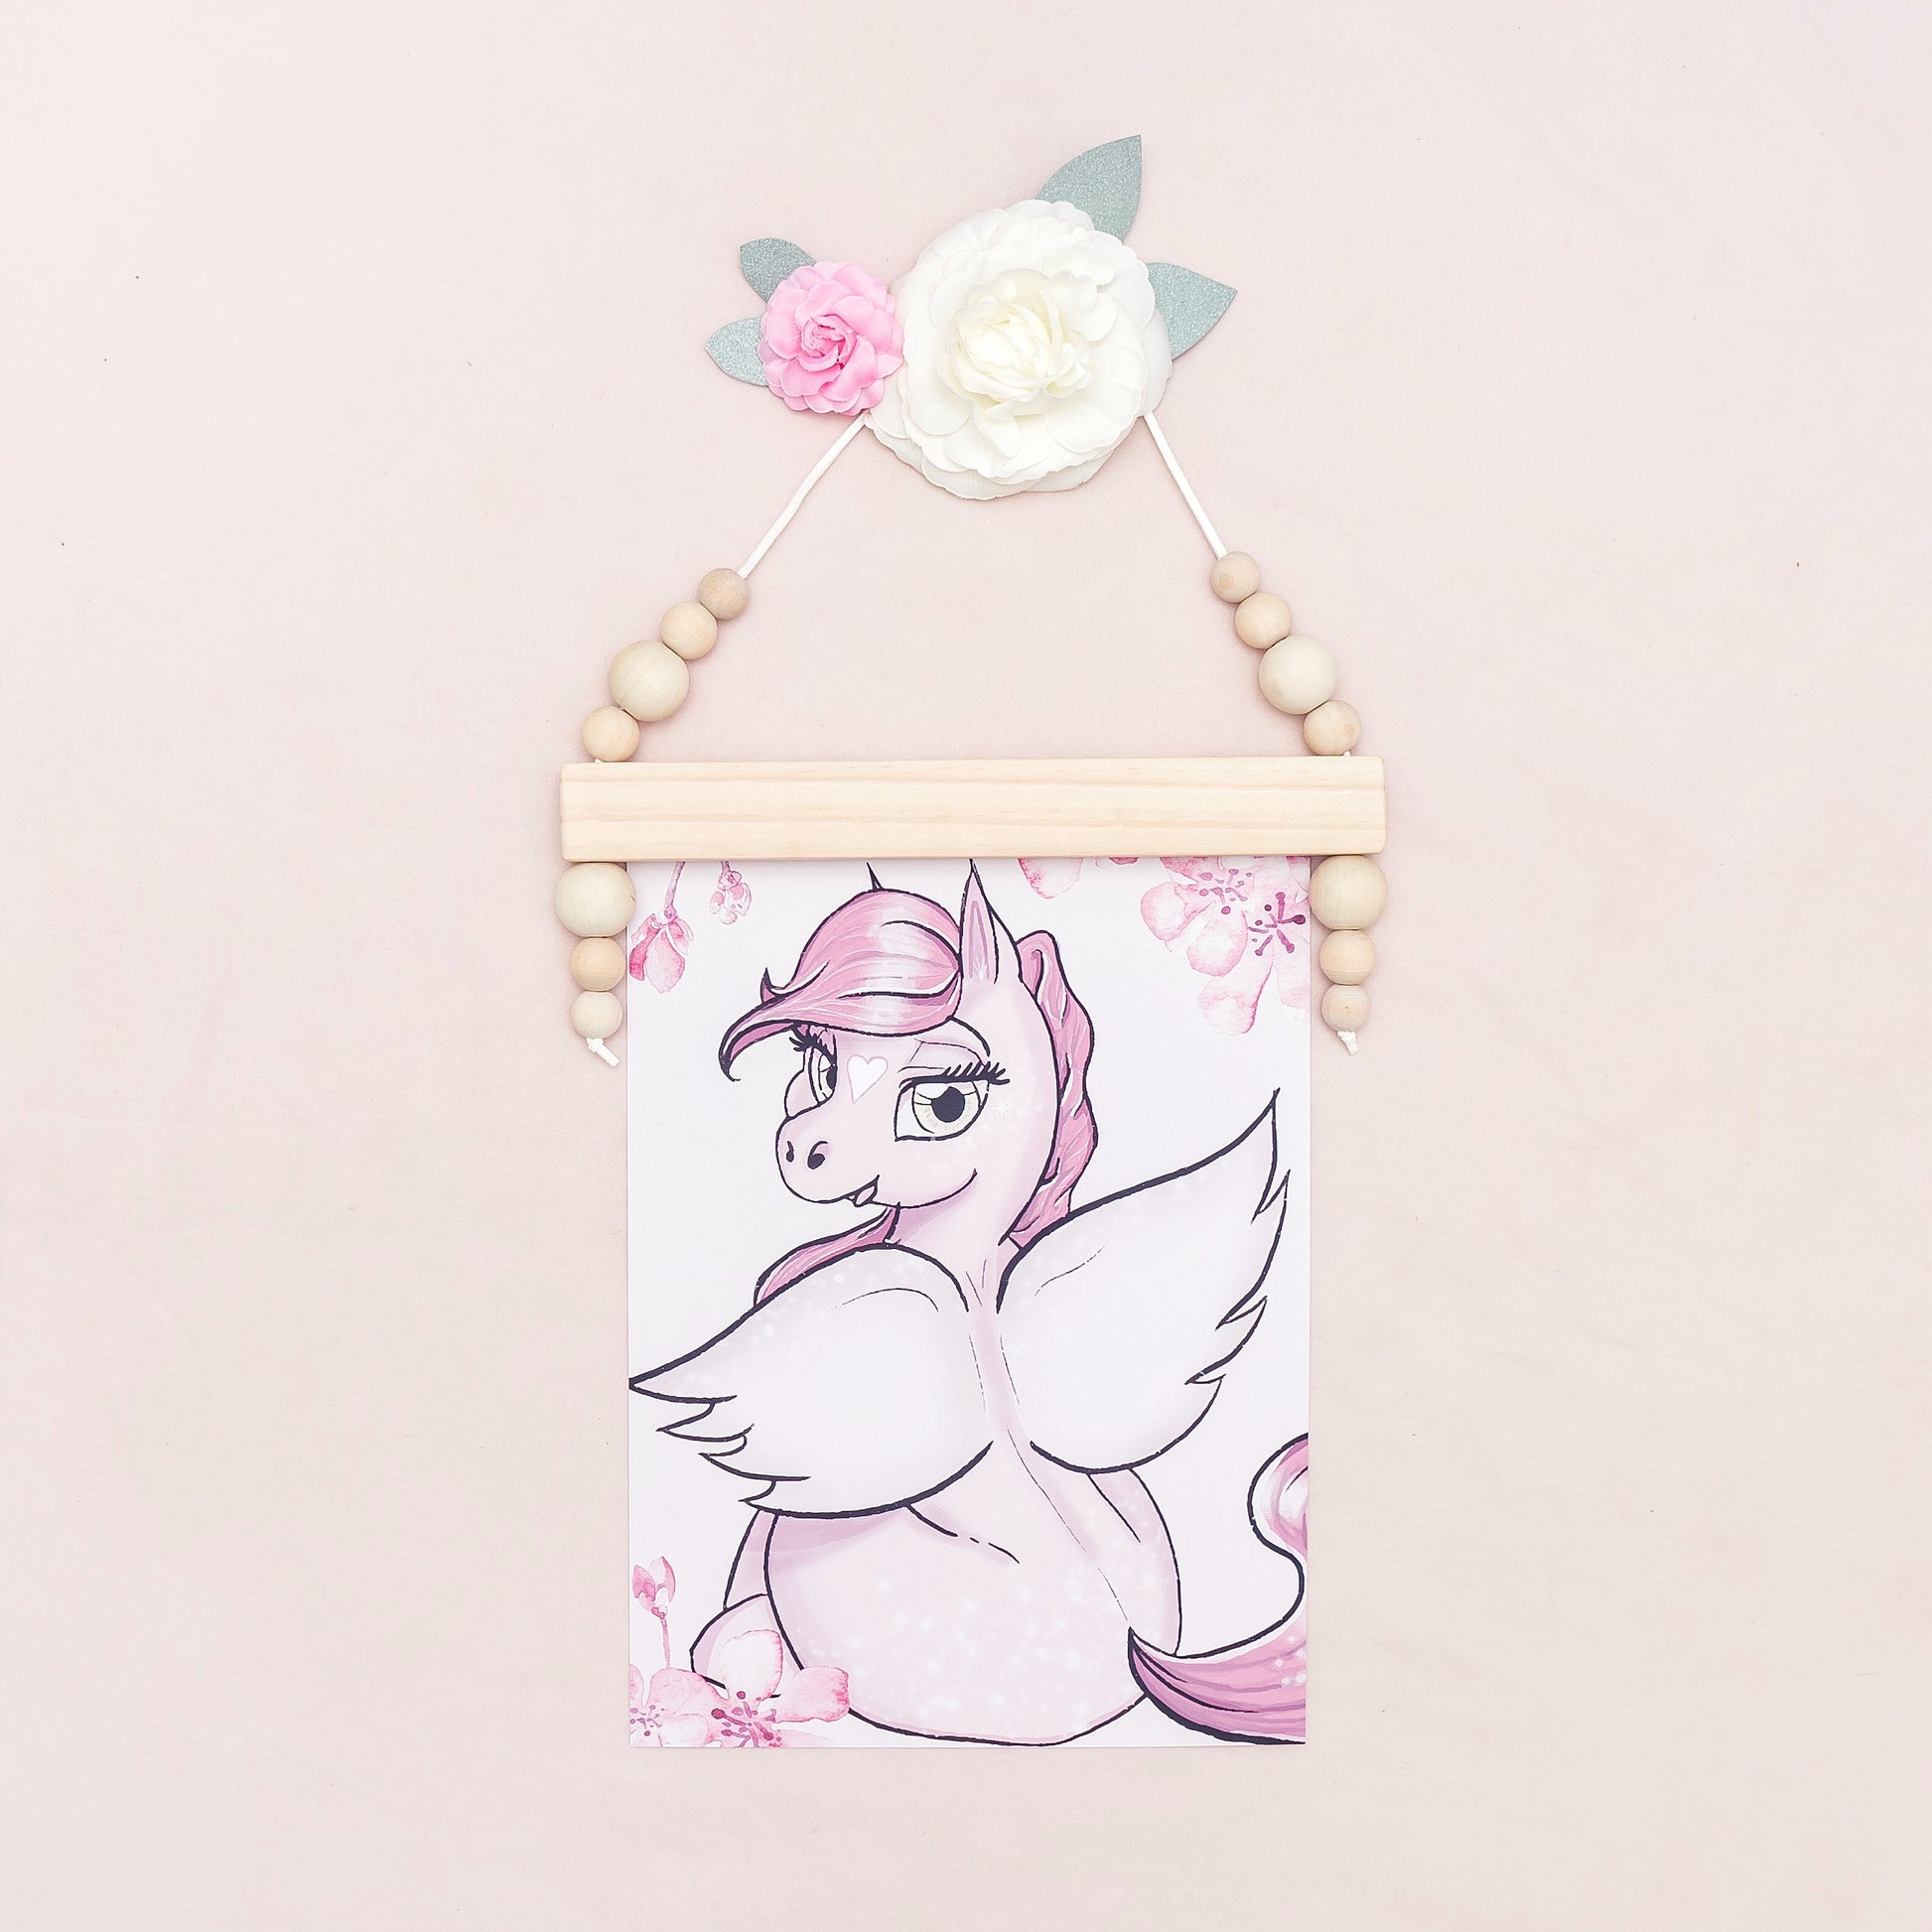 Cherry Blossom the Pegasus - Mae She Reign - Creative Studio